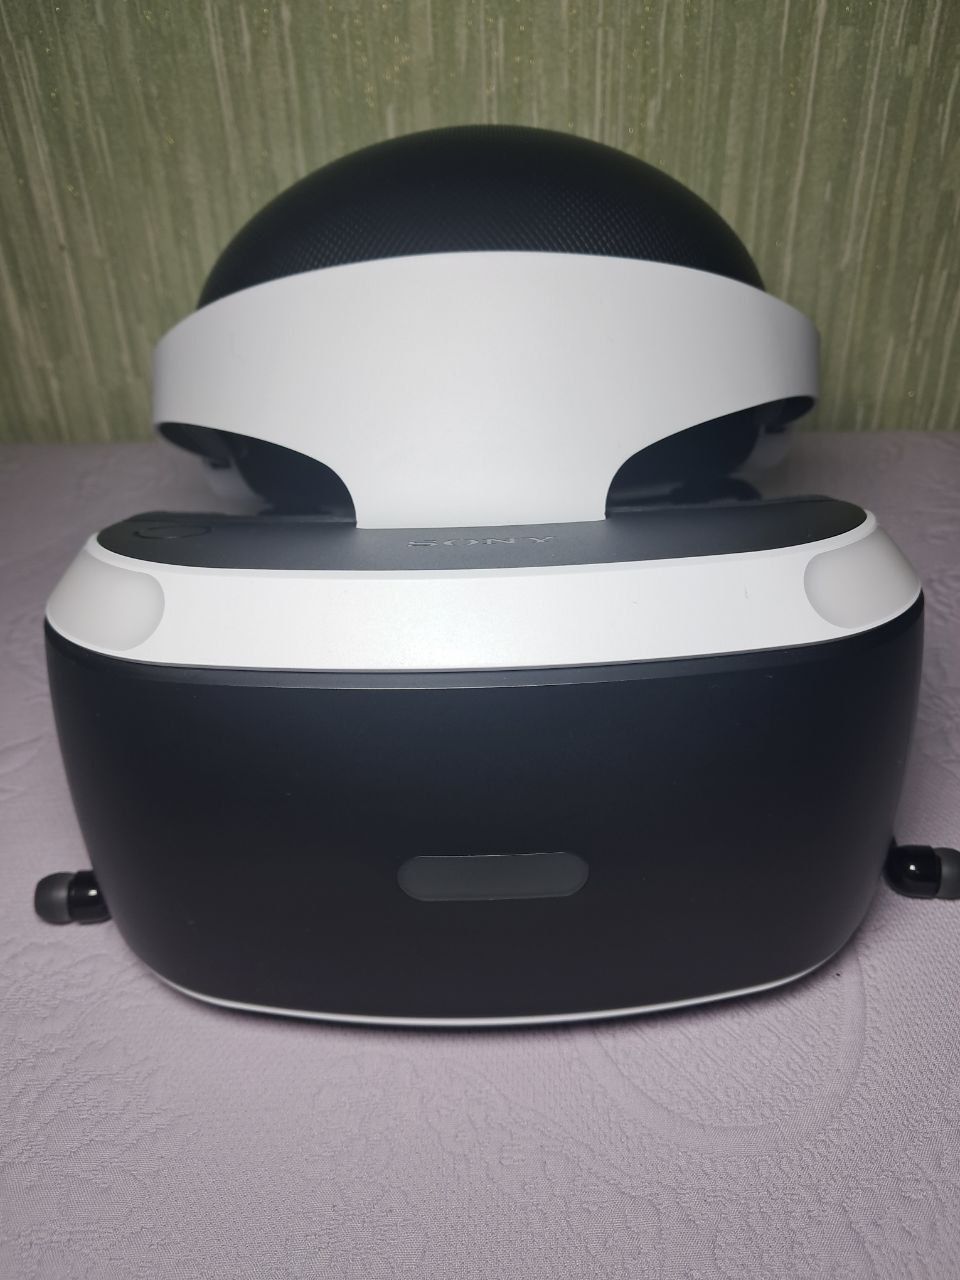 VR Sony PlayStation 4 віртуальна реальність